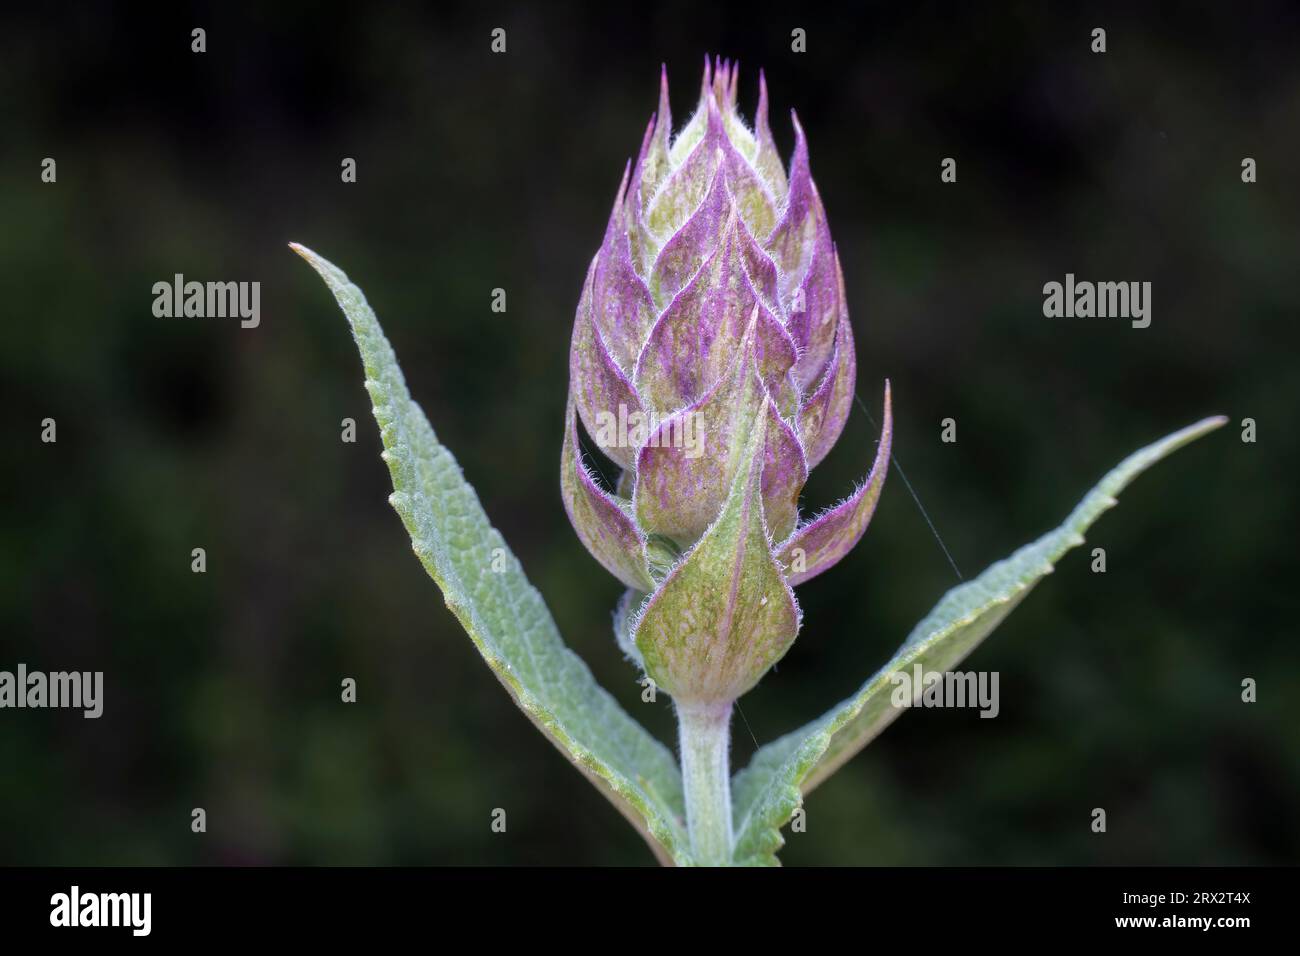 Salvia japonica purpurea flowers in the wild state Stock Photo